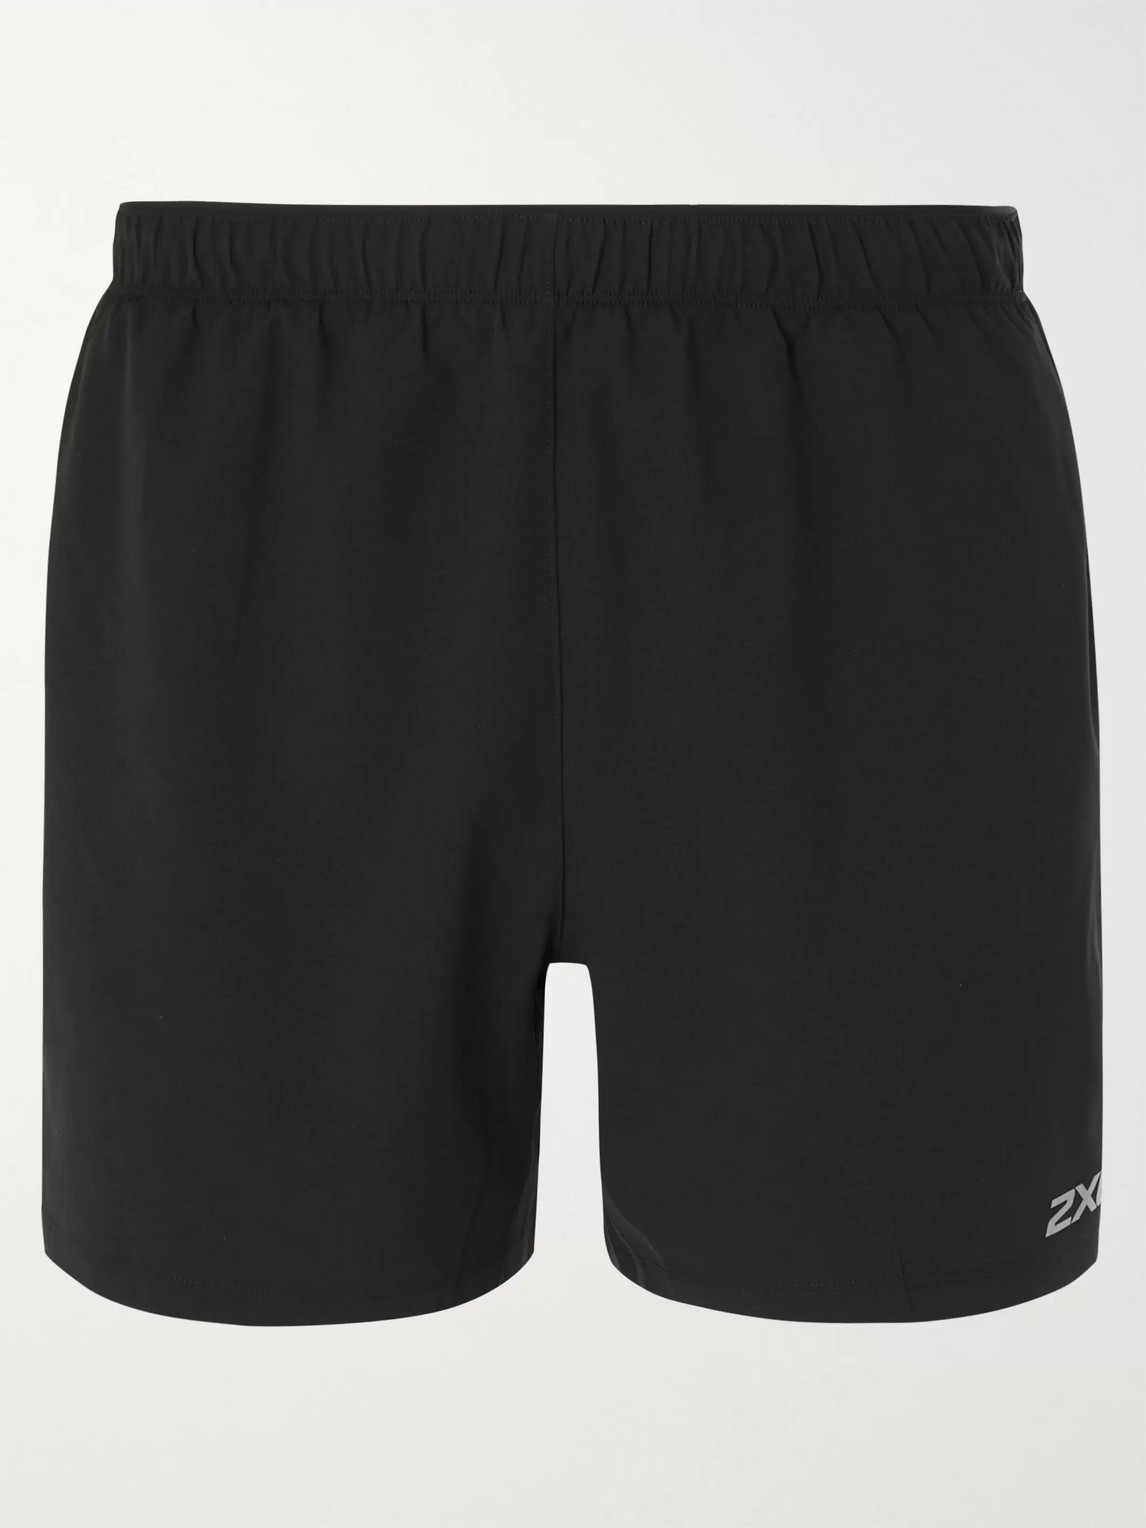 2xu Xvent Vapor Shorts In Black